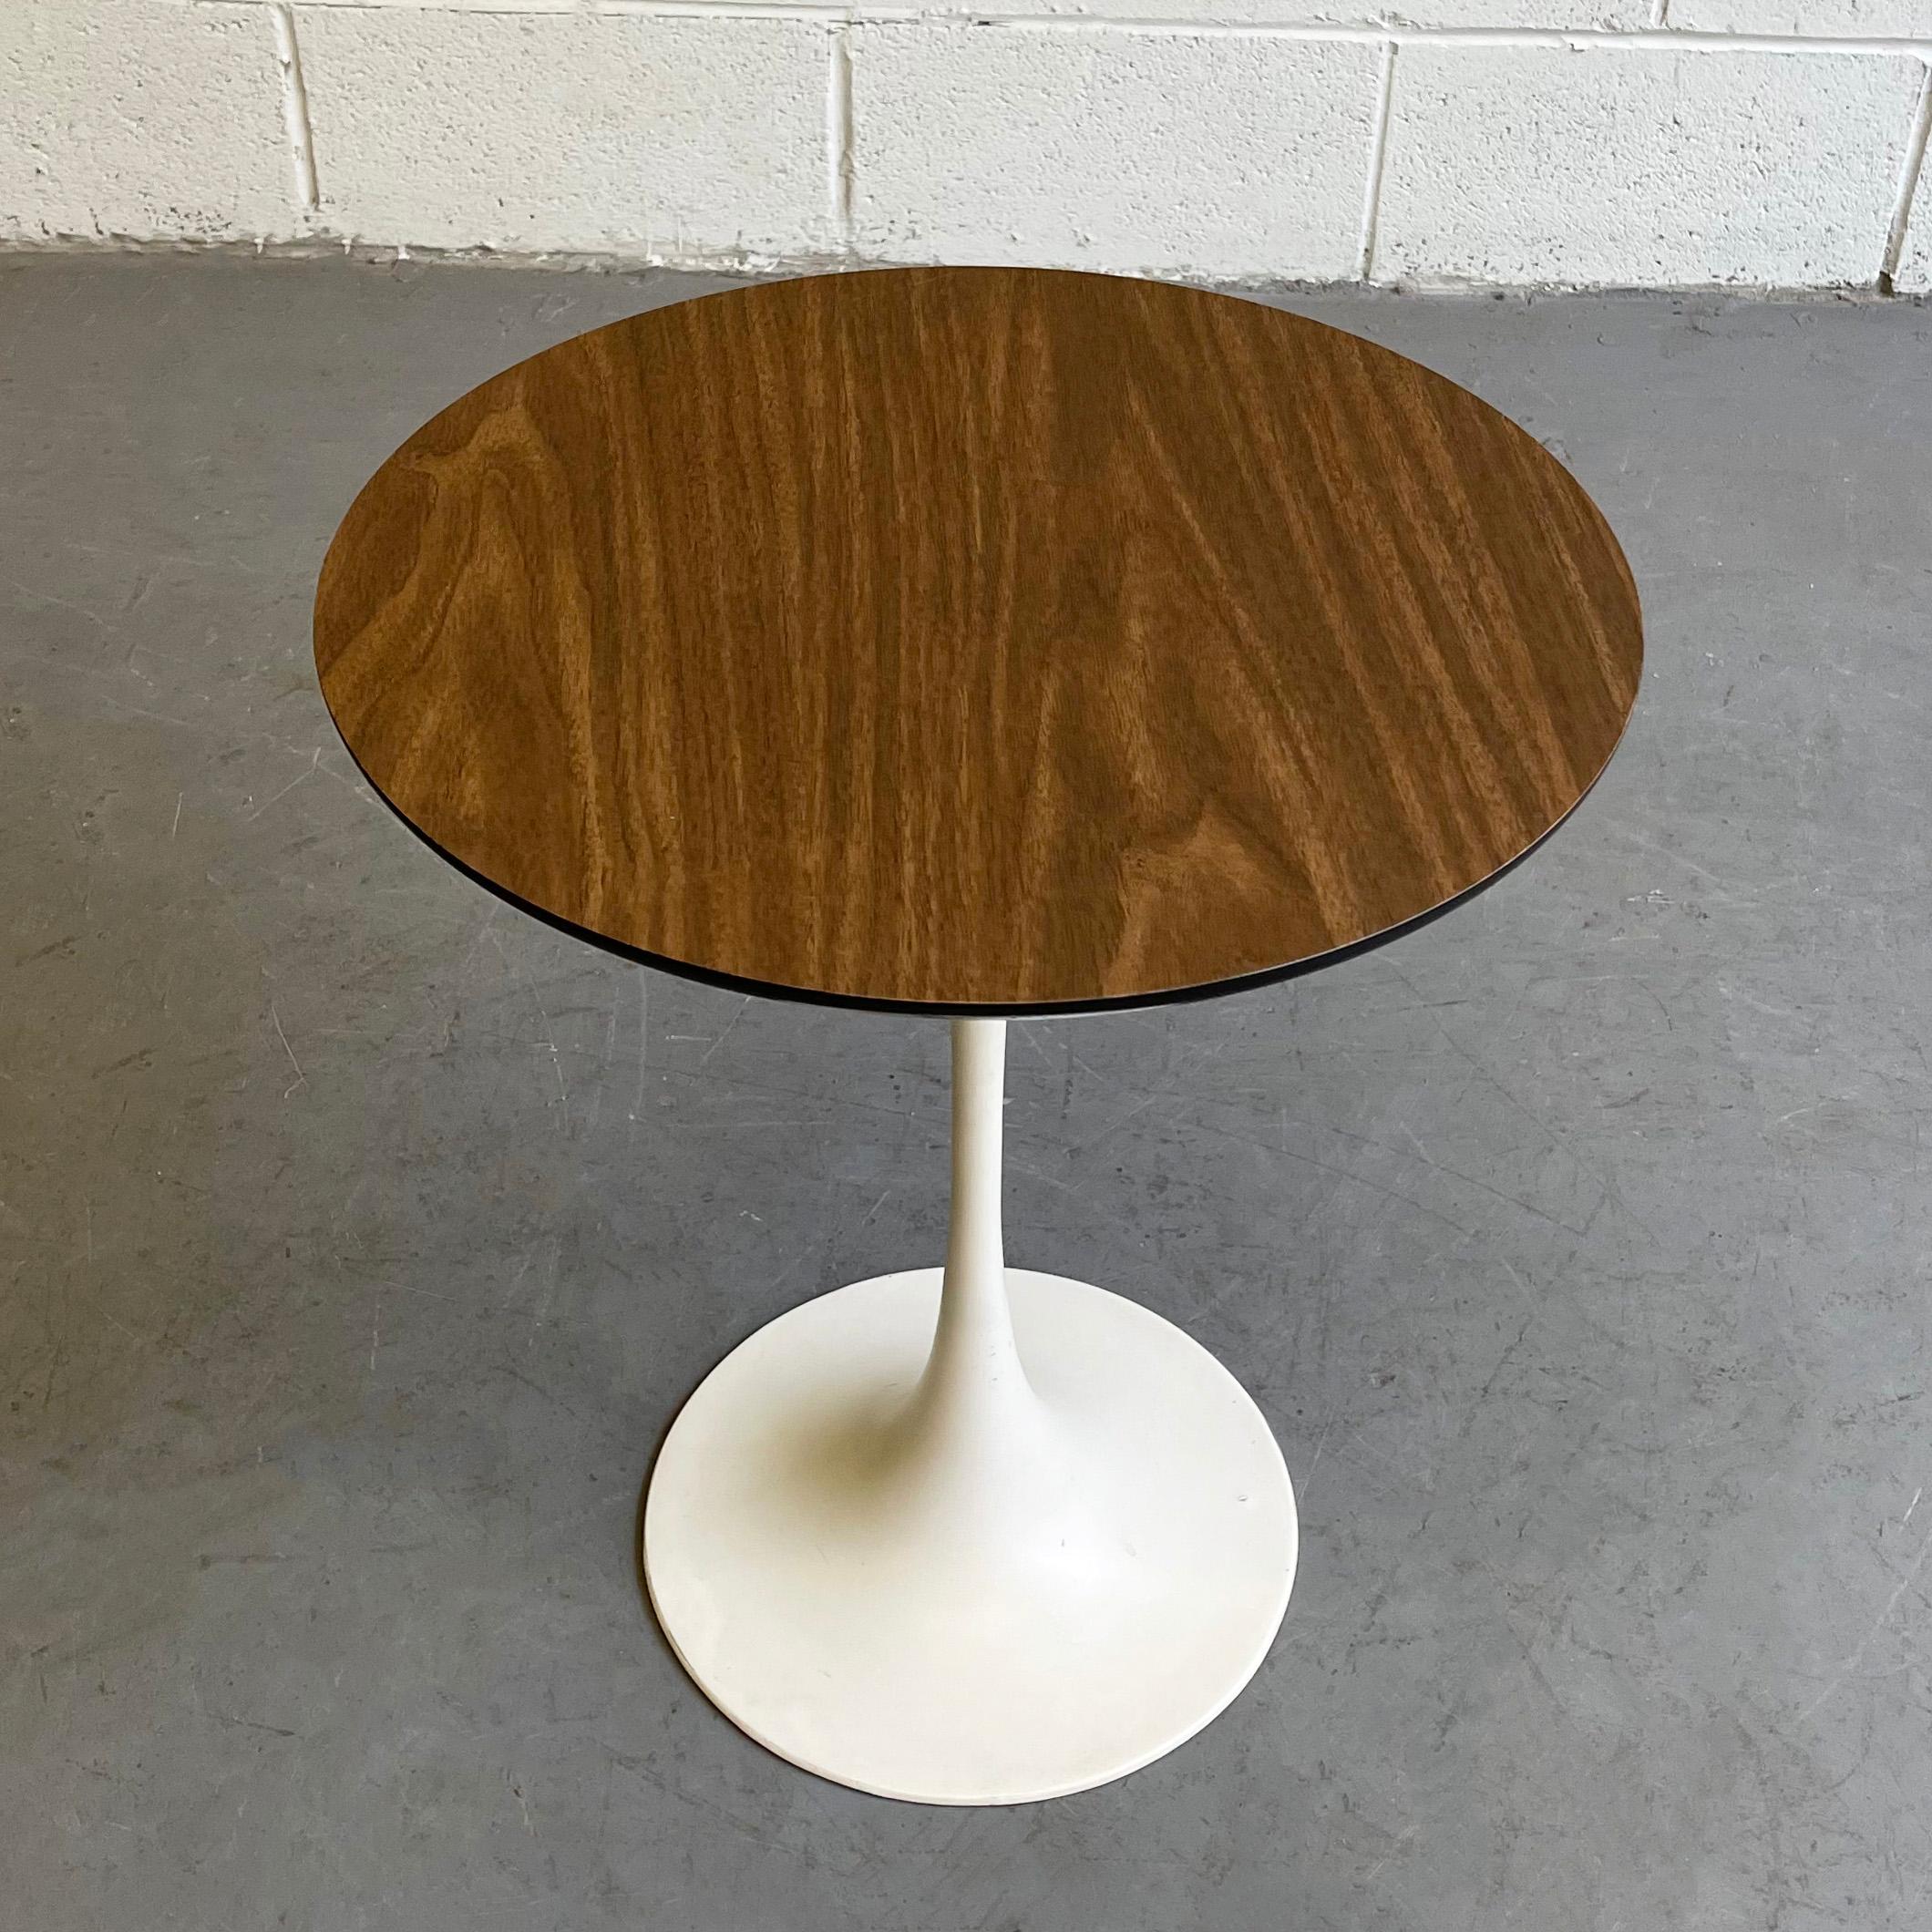 American Mid-Century Modern Tulip Side Table by Eero Saarinen For Knoll